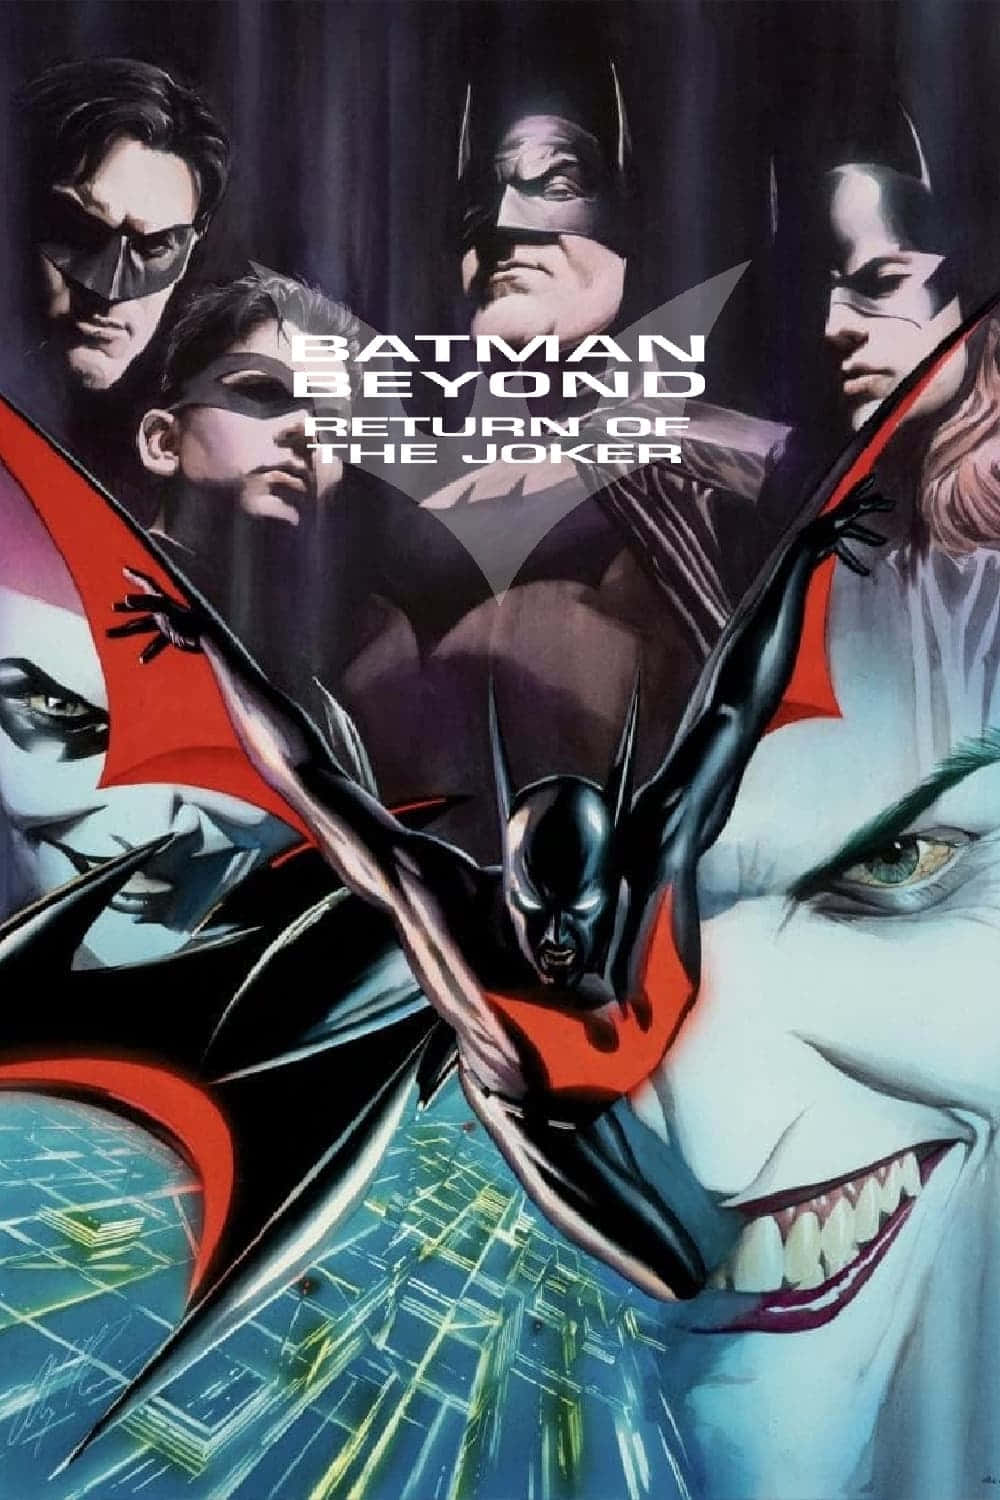 batman beyond movie poster